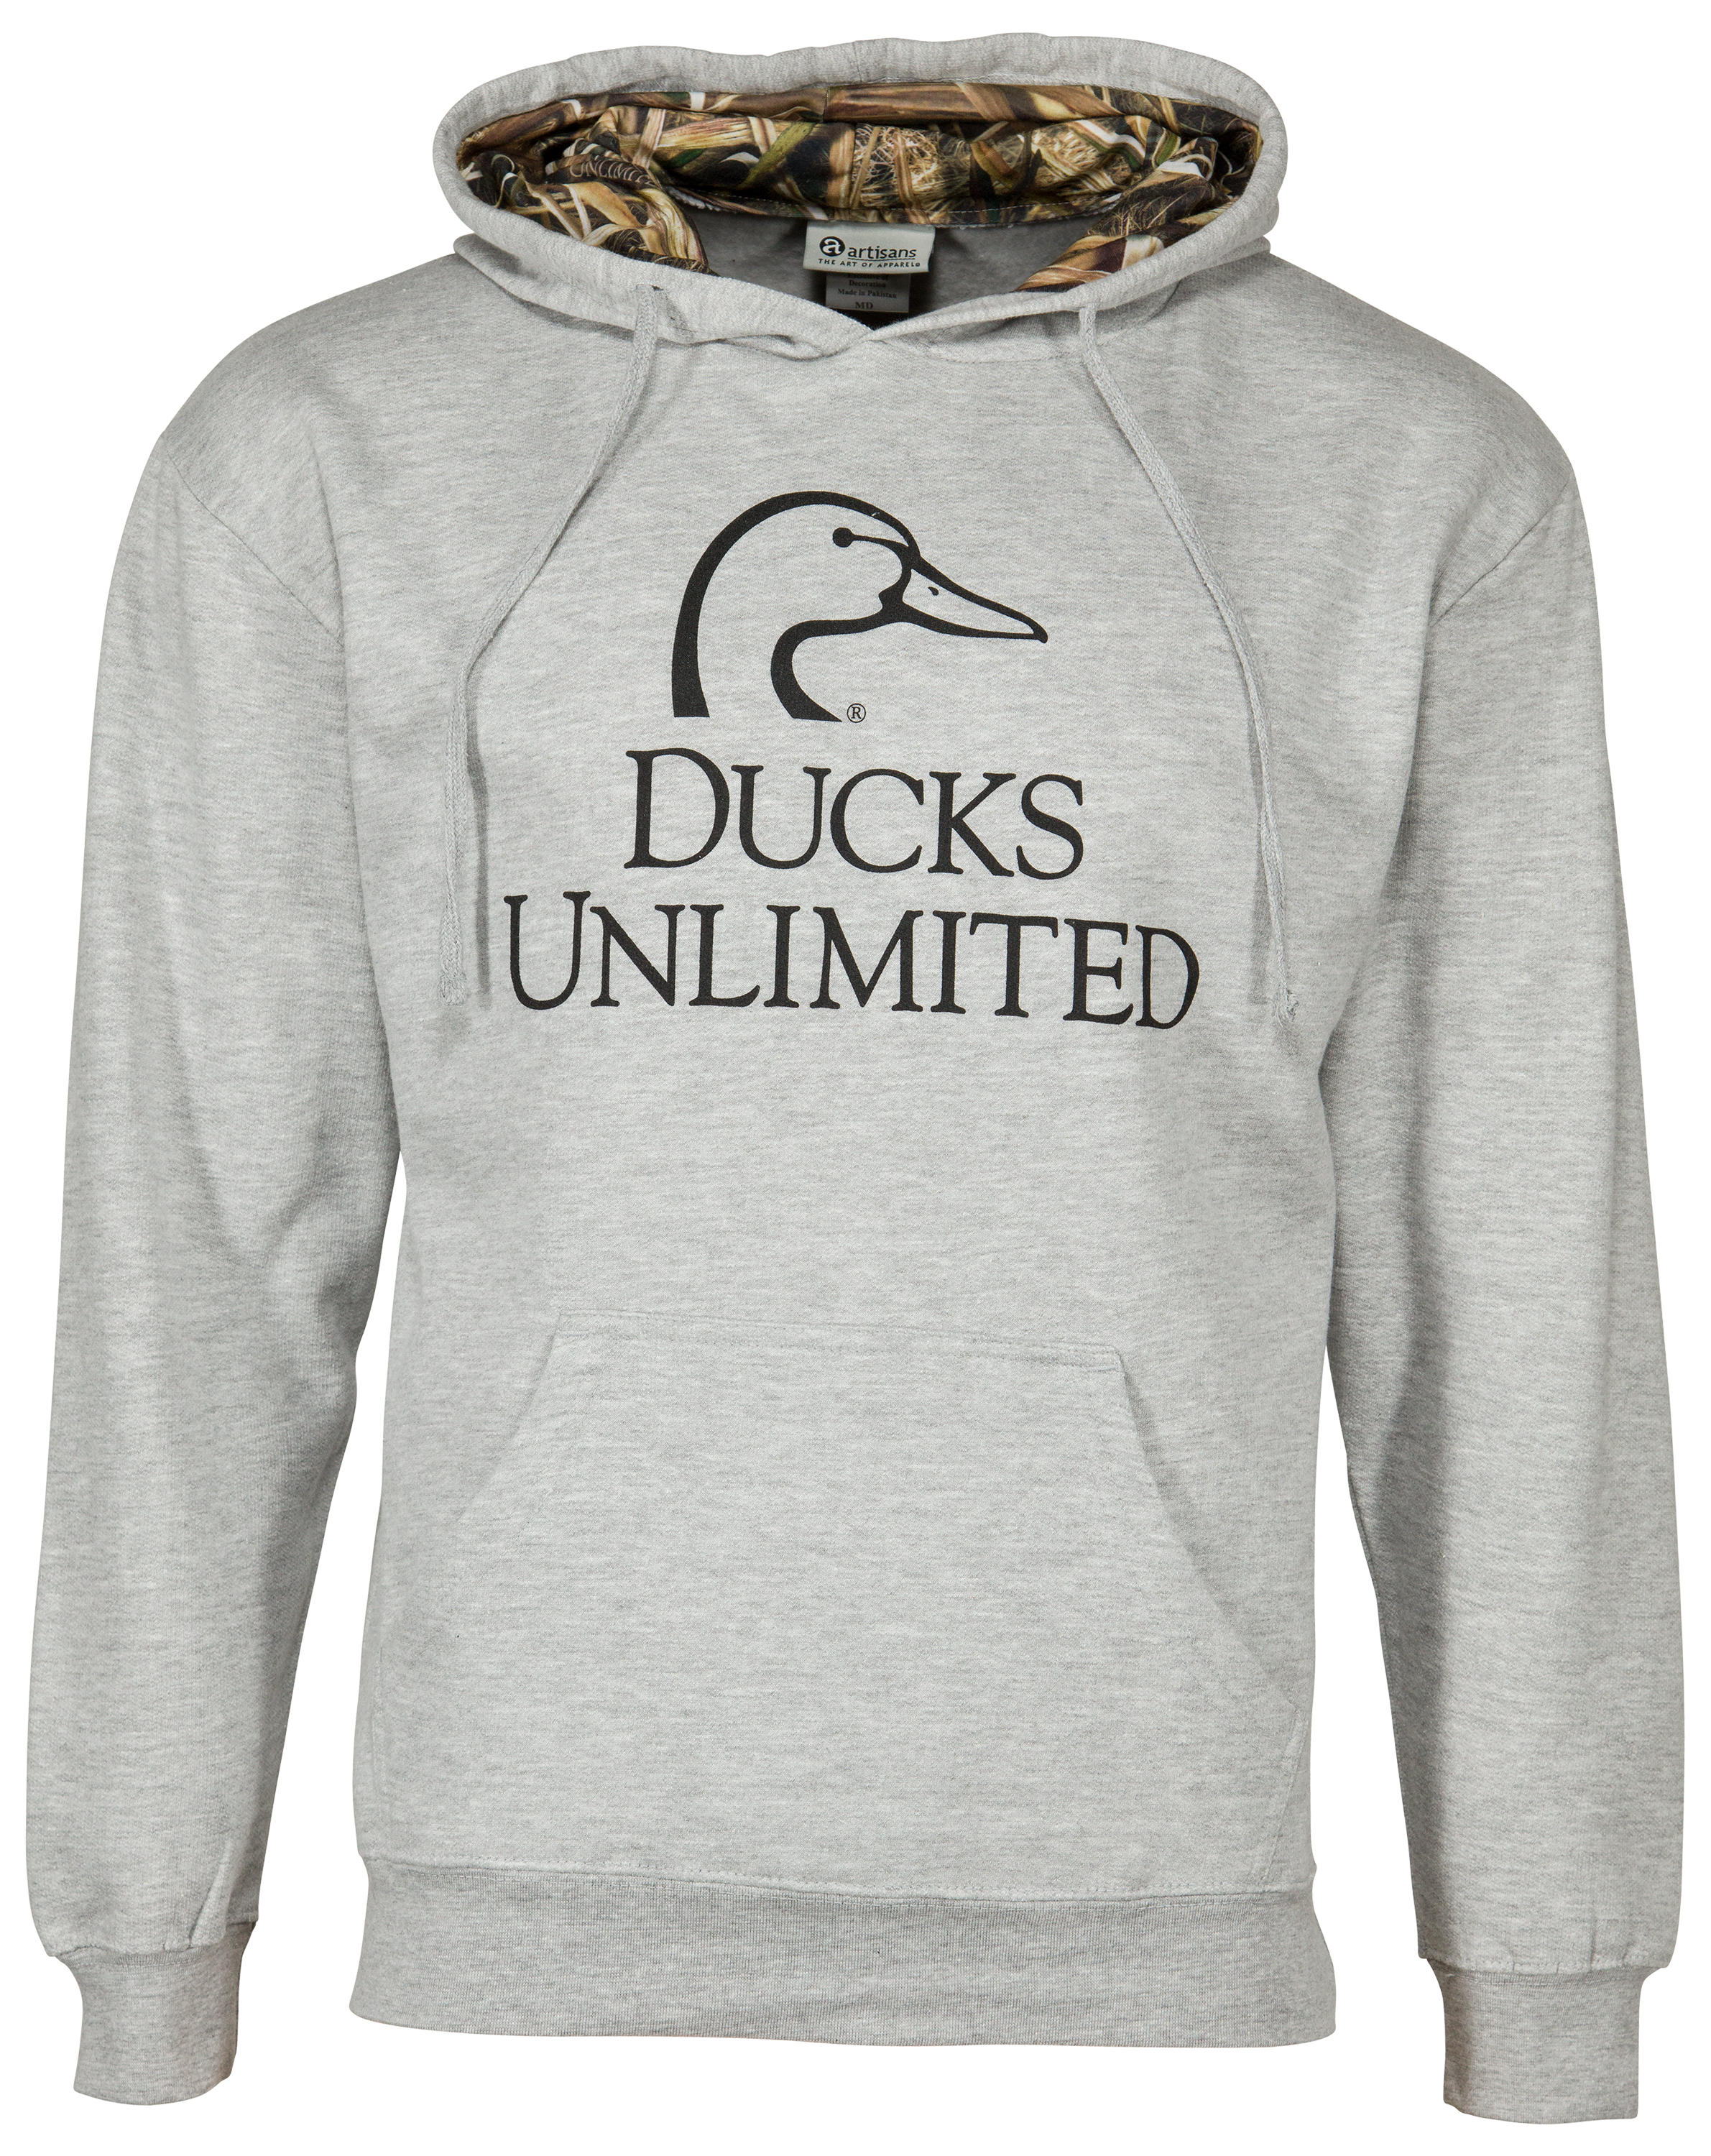 Ducks Unlimited Logo Hoodie for Men